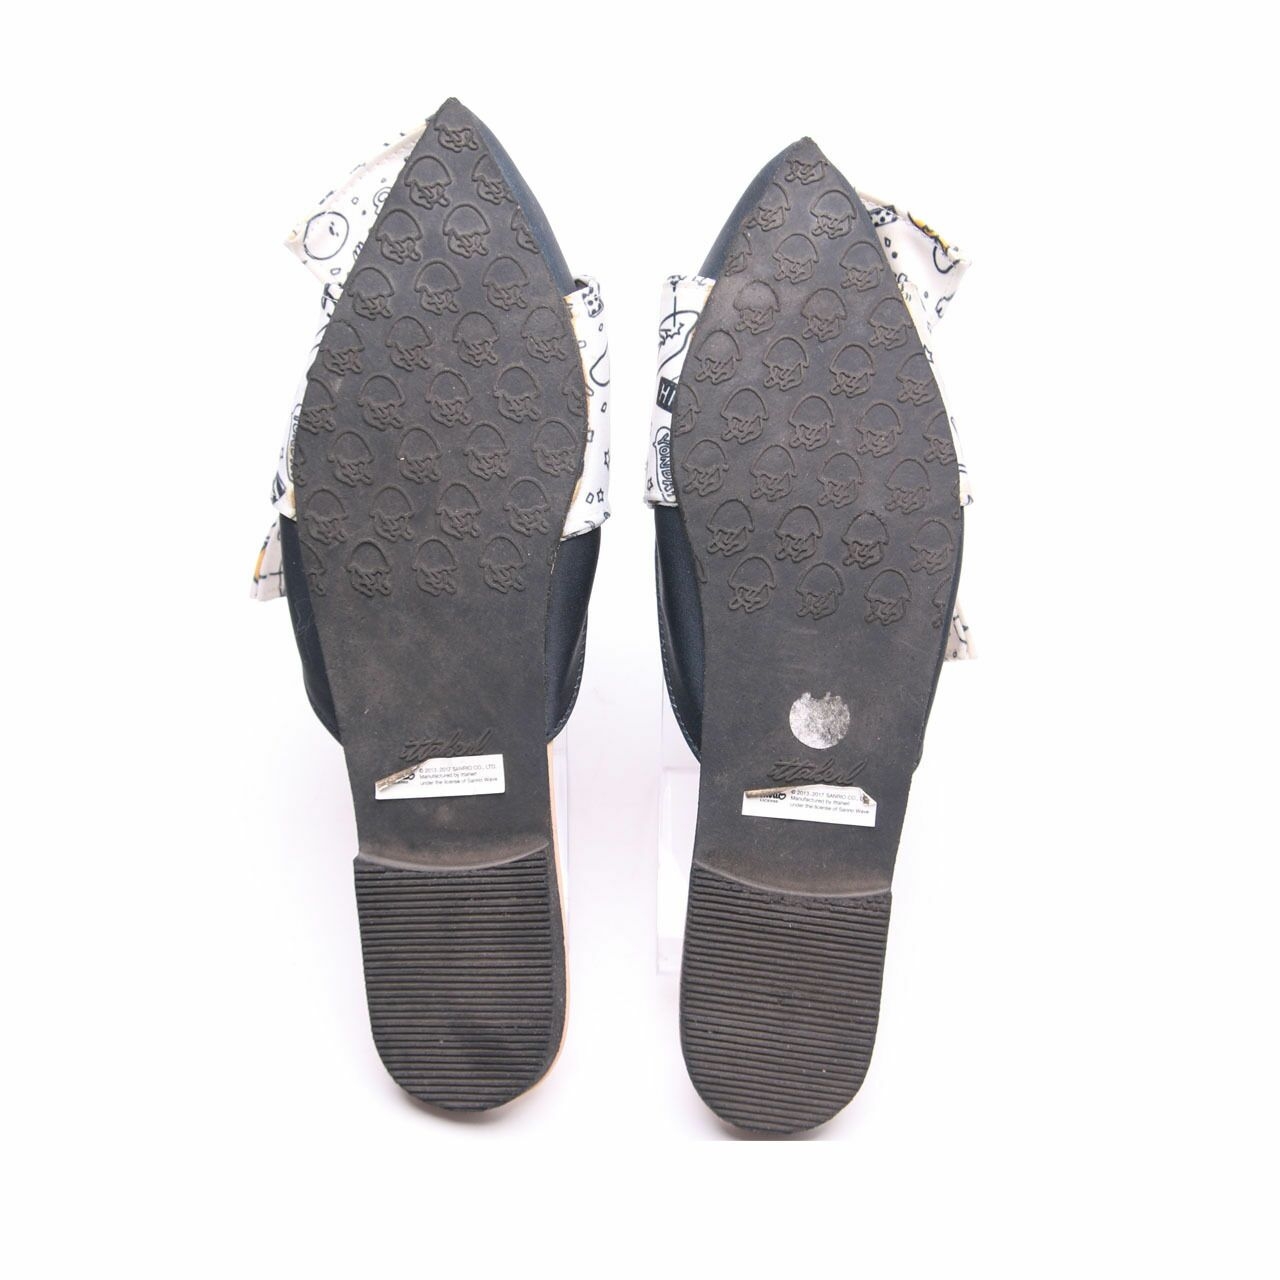 Ittaherl Black & Off White Mules Sandals